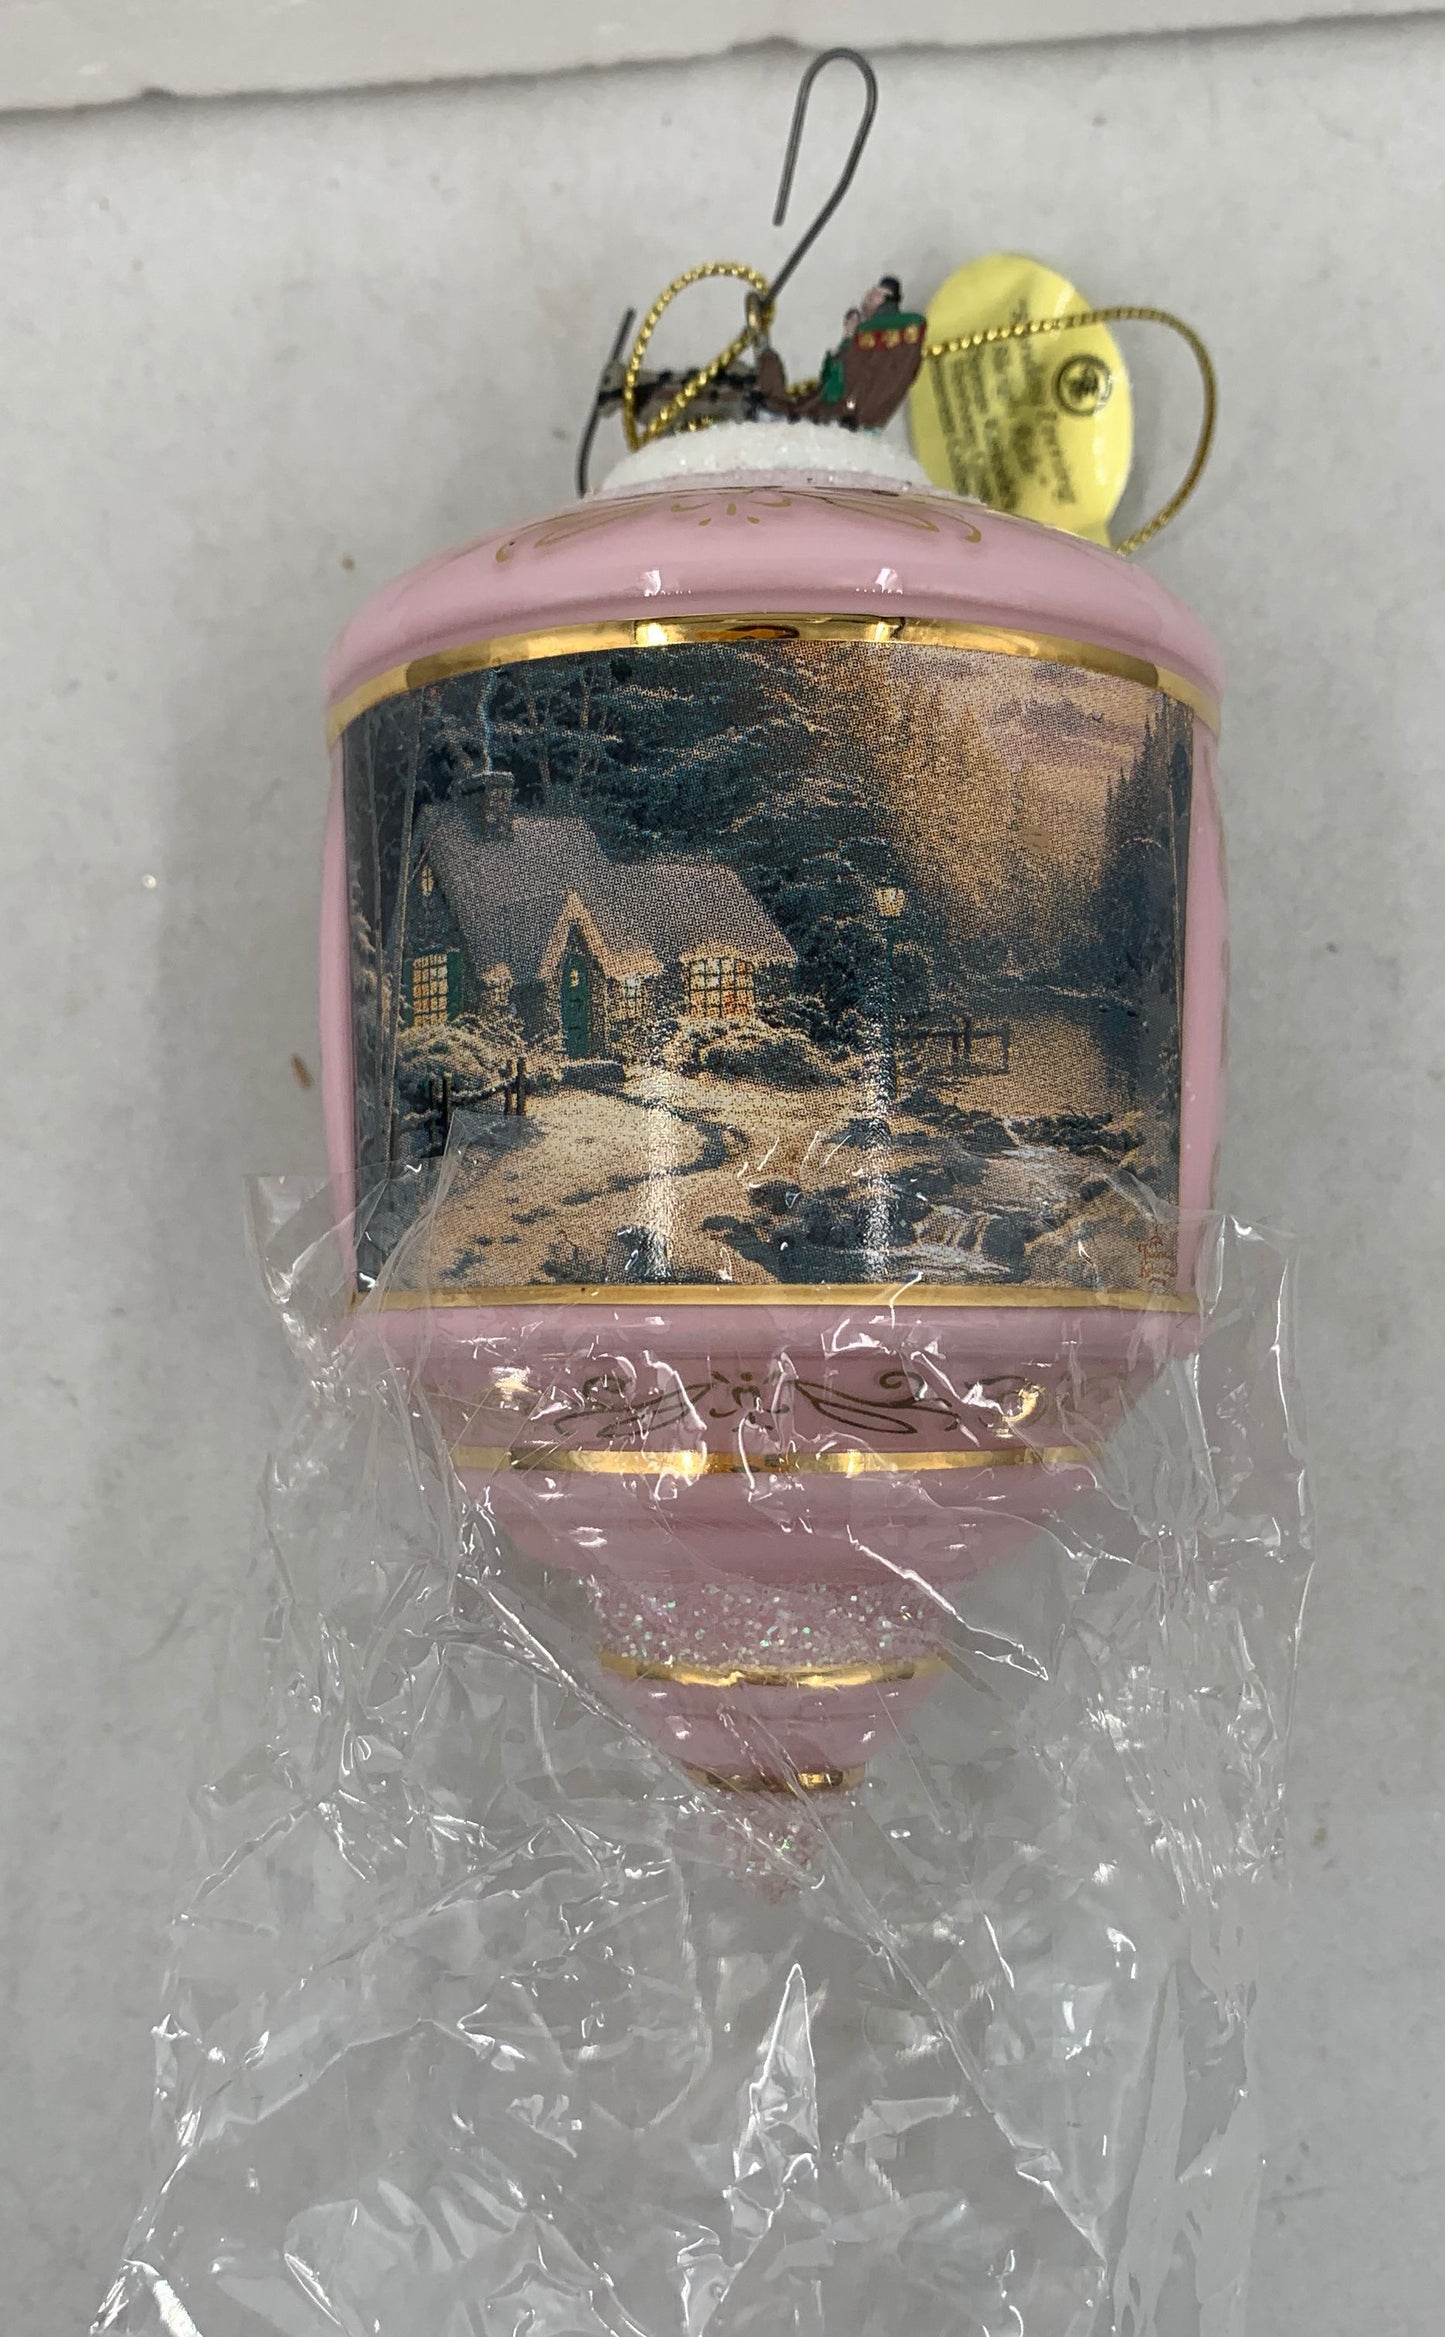 The Bradford Editions Thomas Kinkade Heirloom Glass Ornament Set #68417 2001